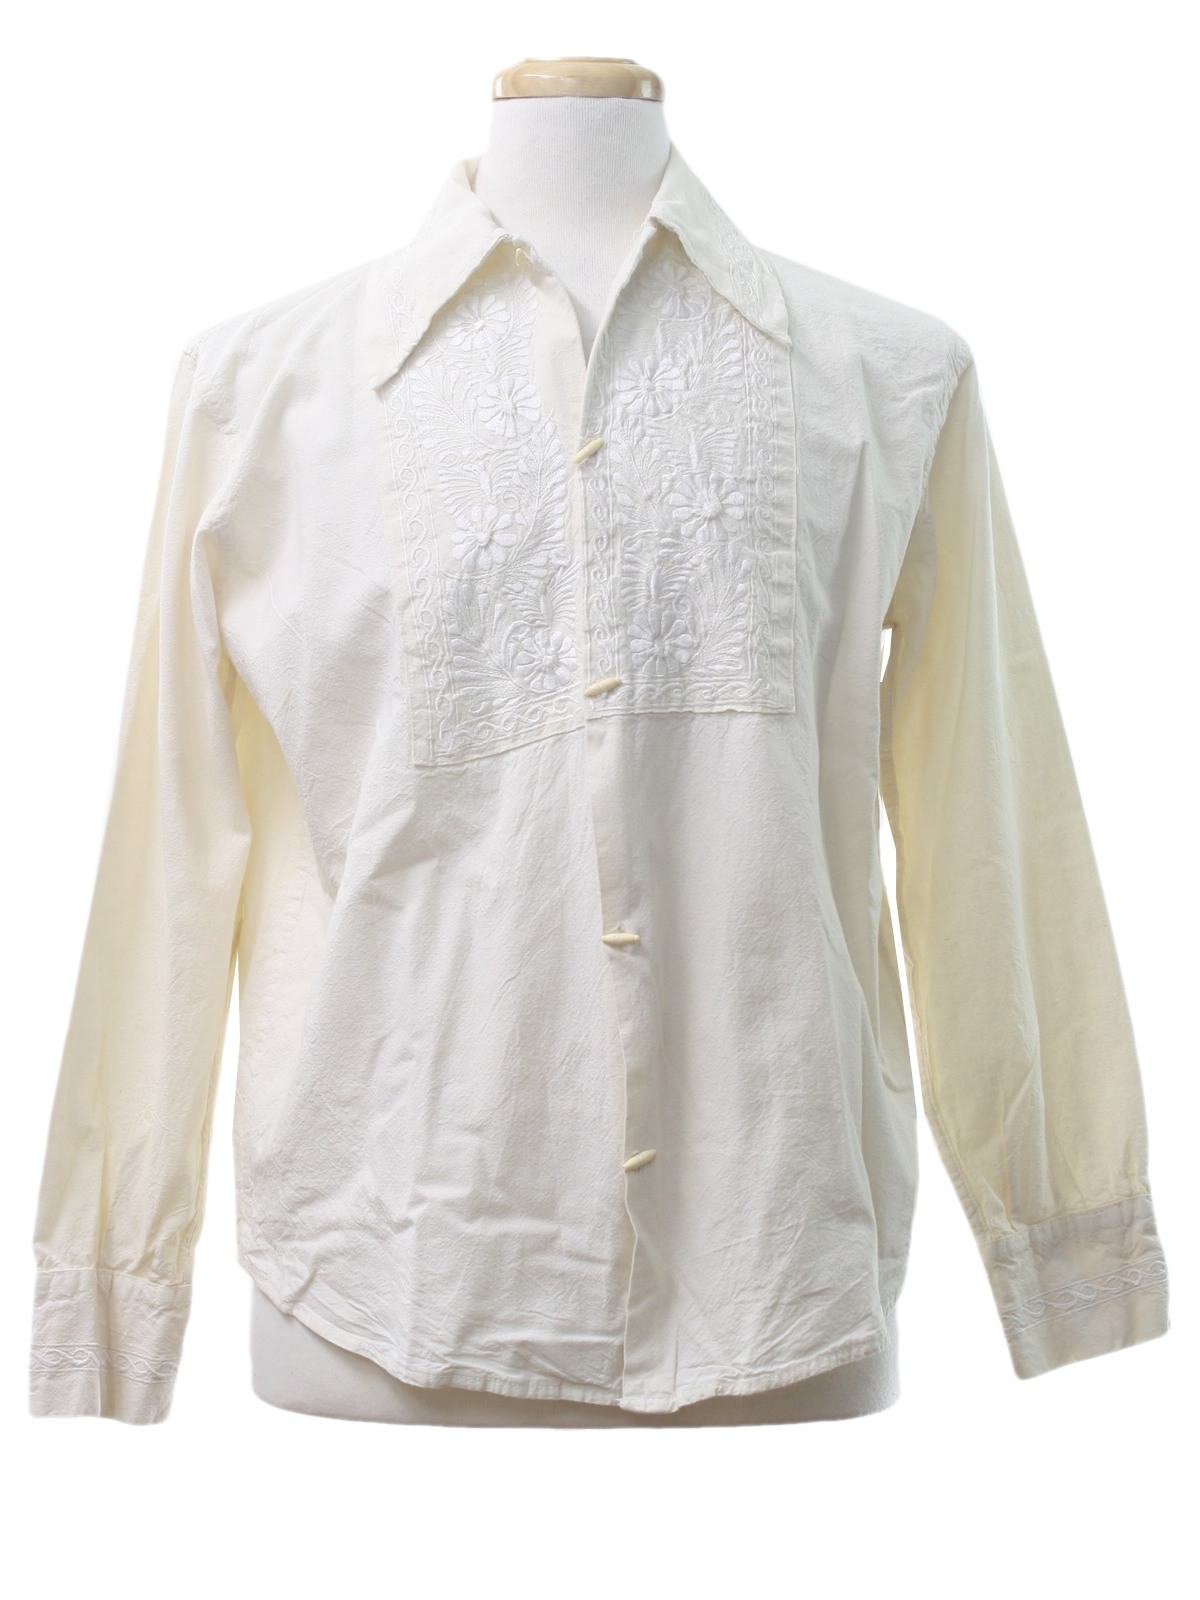 70s Retro Hippie Shirt: 70s -Missing Label- Unisex off white background ...